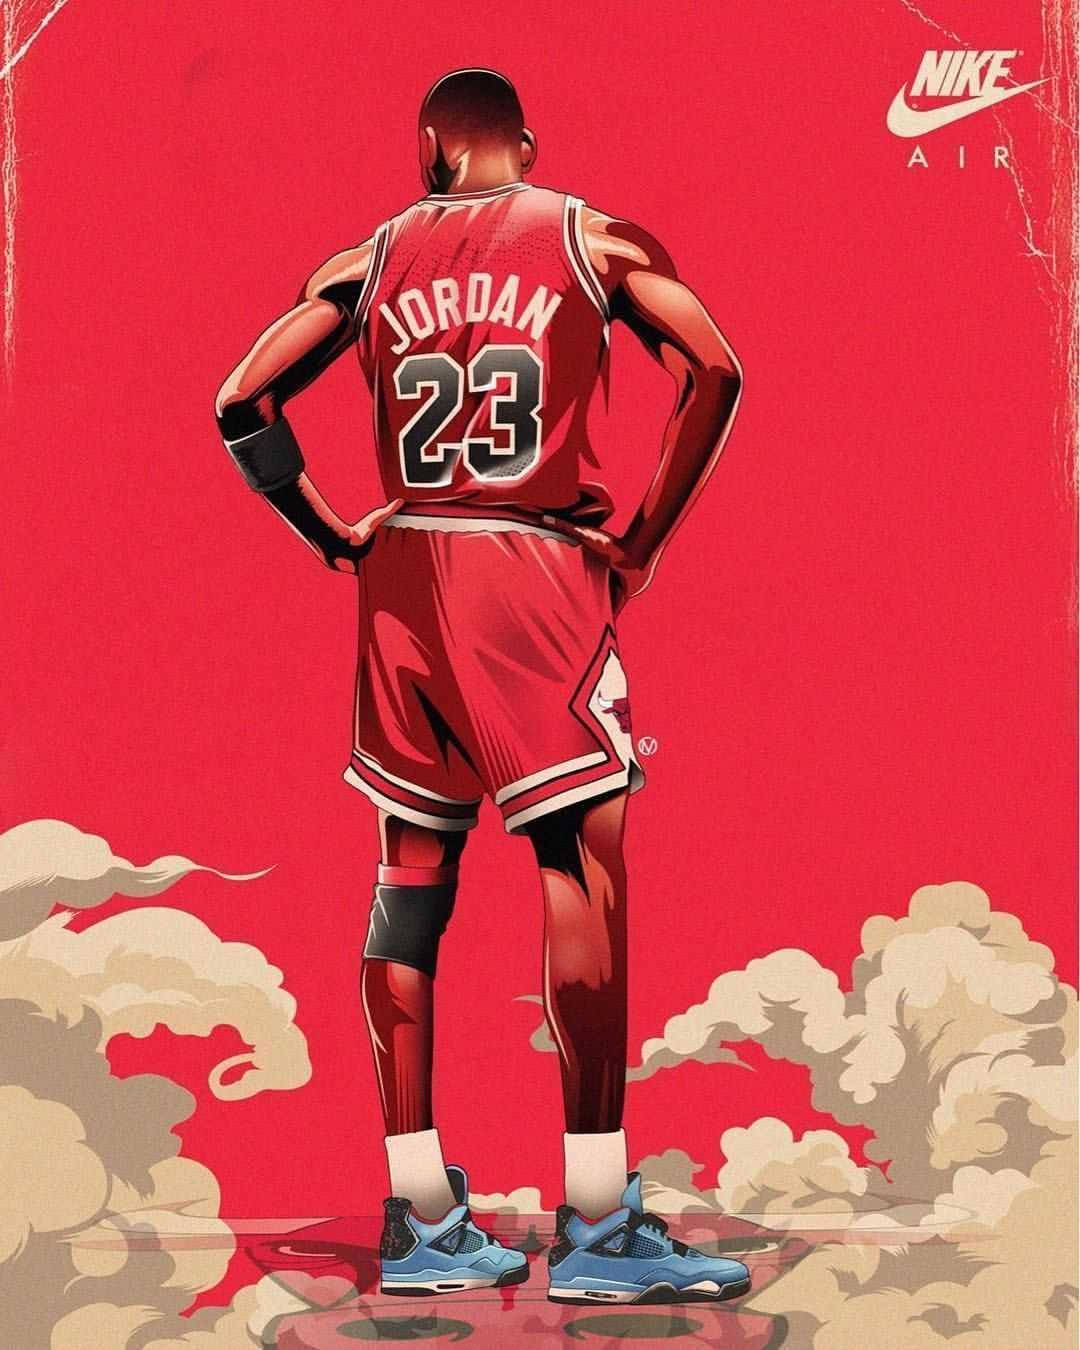 Cool Nike Air Michael Jordan Art